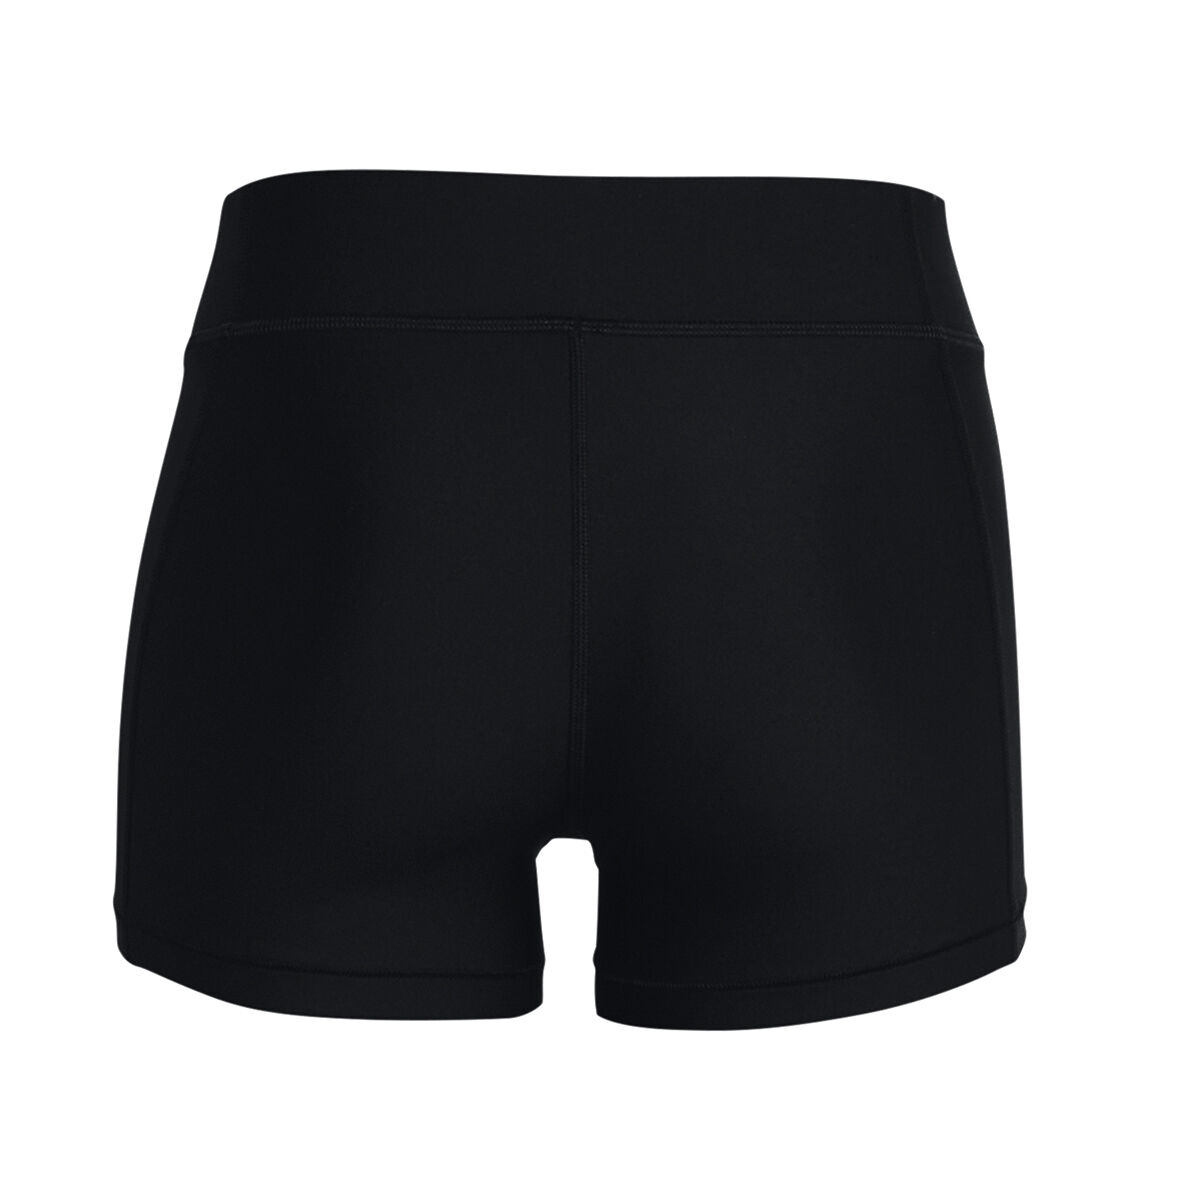 Under Armour Women's HeatGear Armour Long Shorts - Black